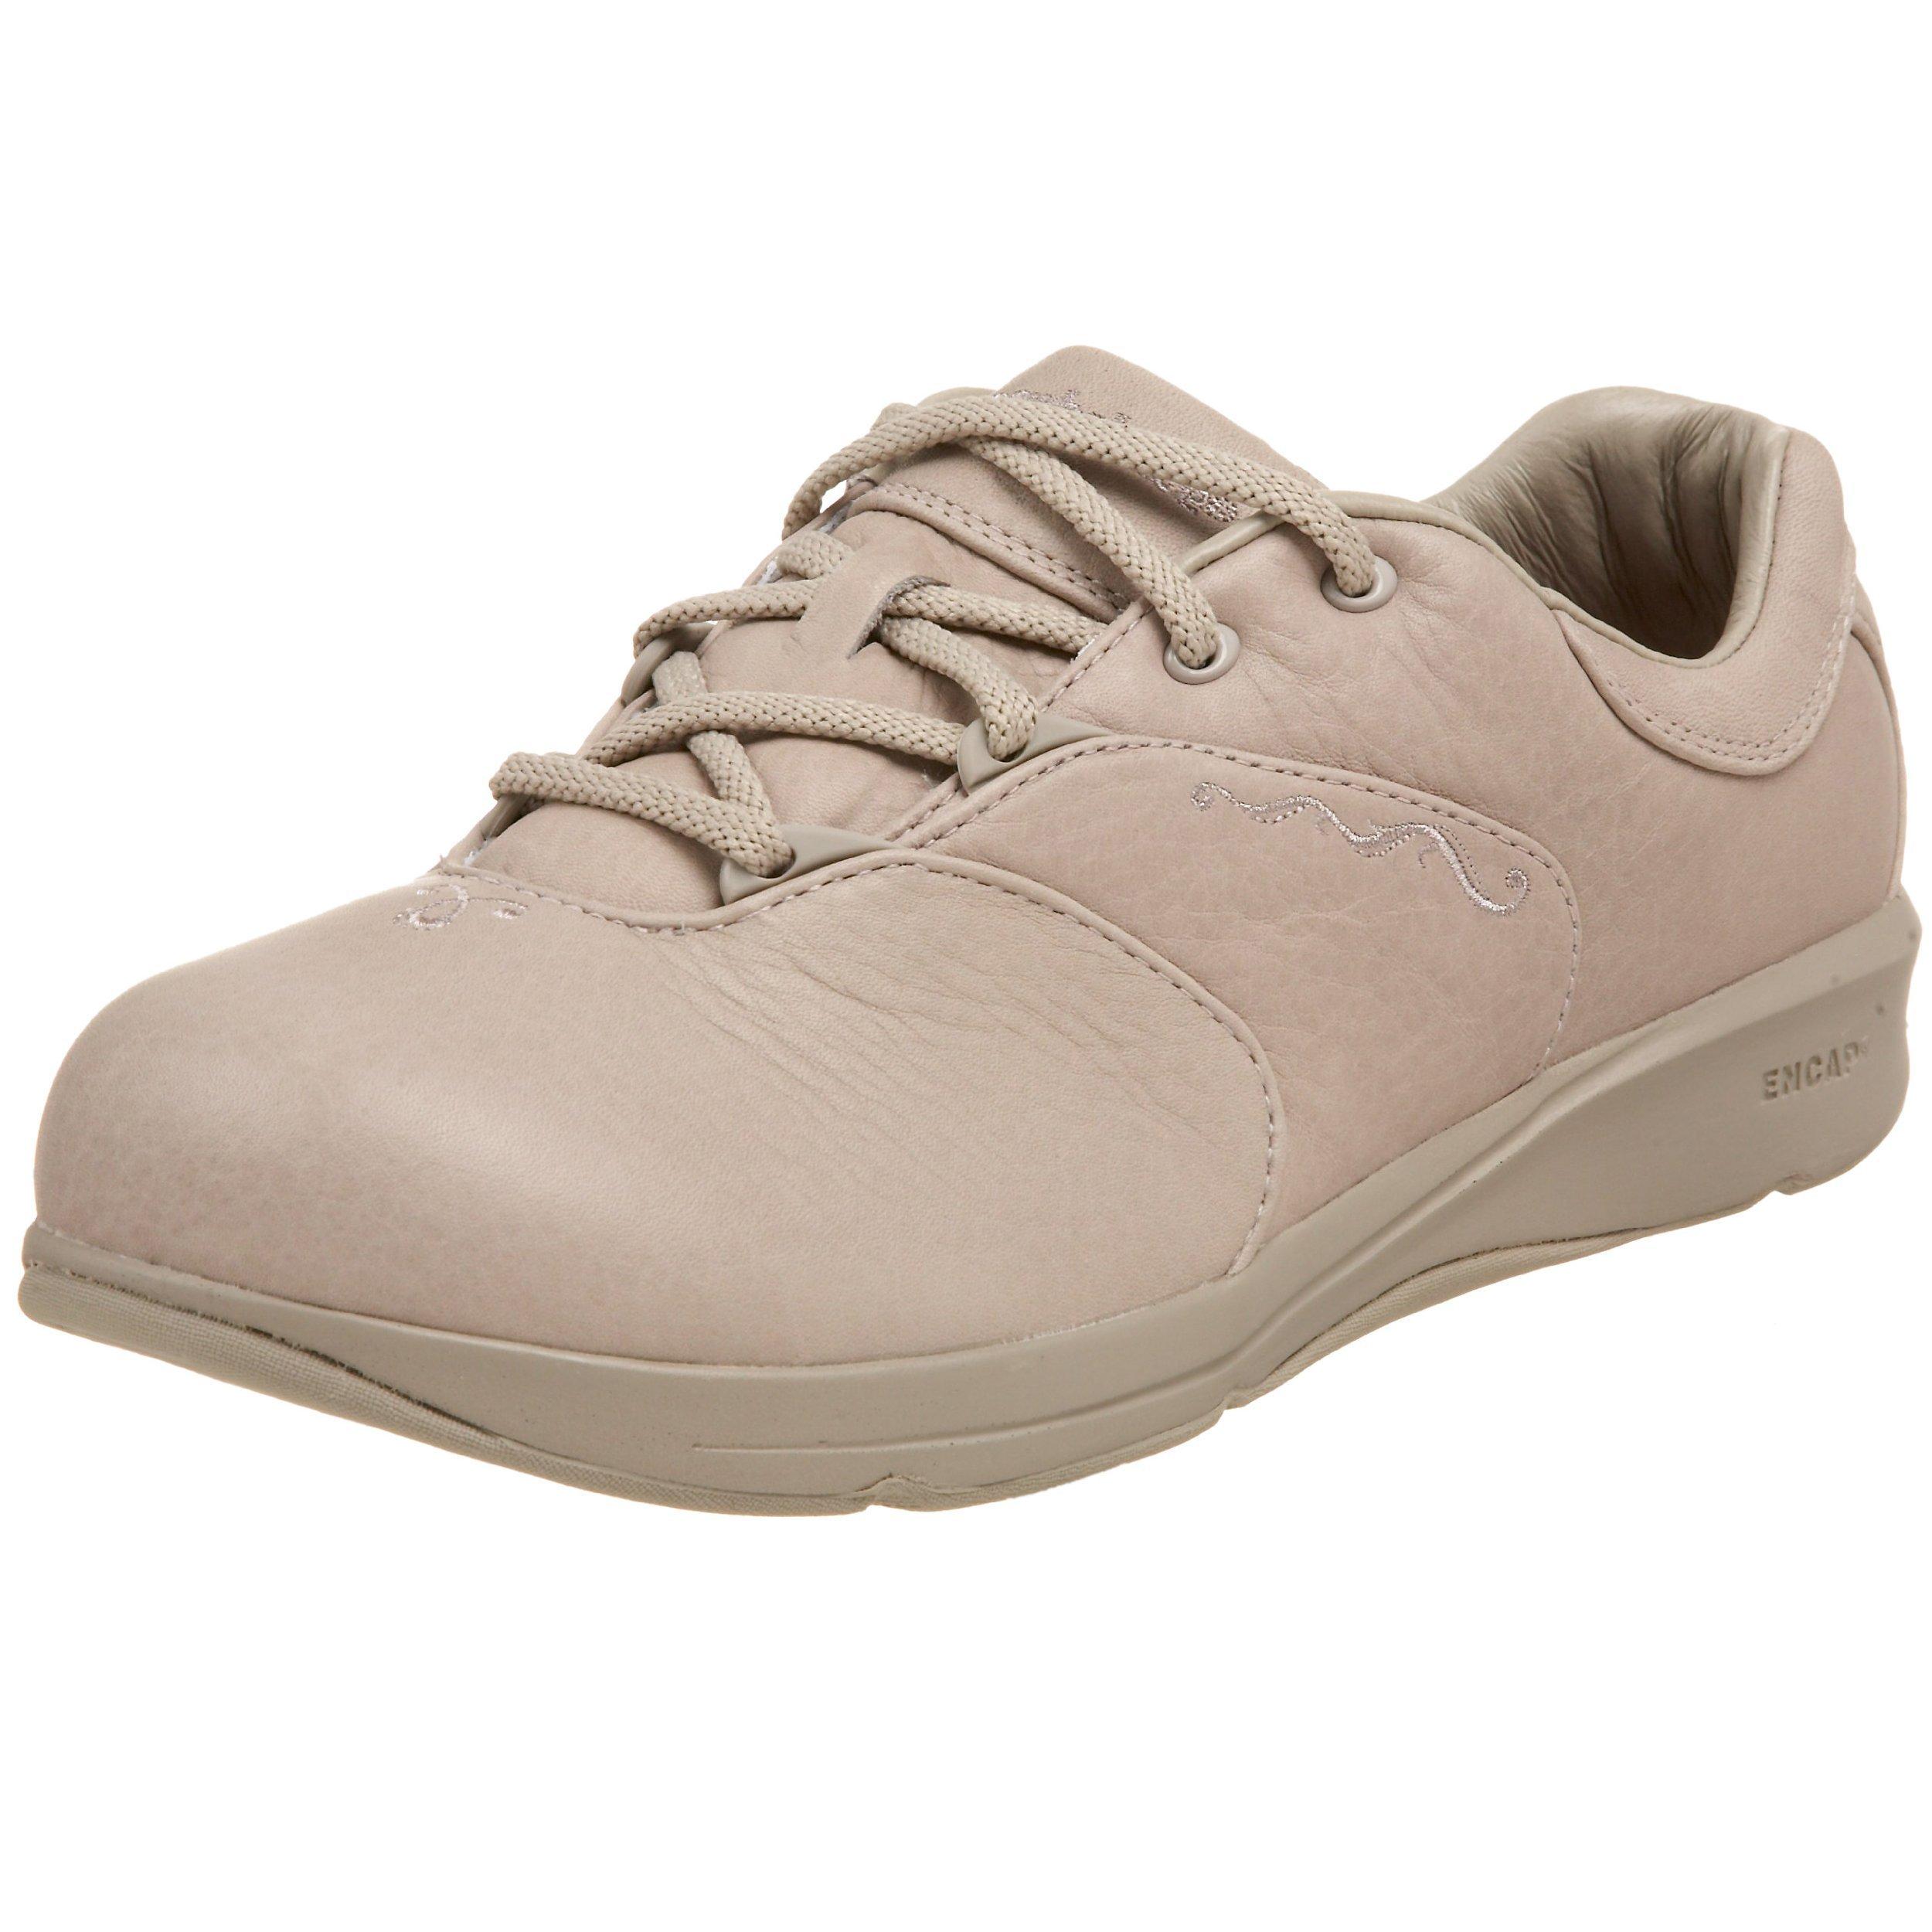 New Balance 901 V1 Walking Shoe | Lyst